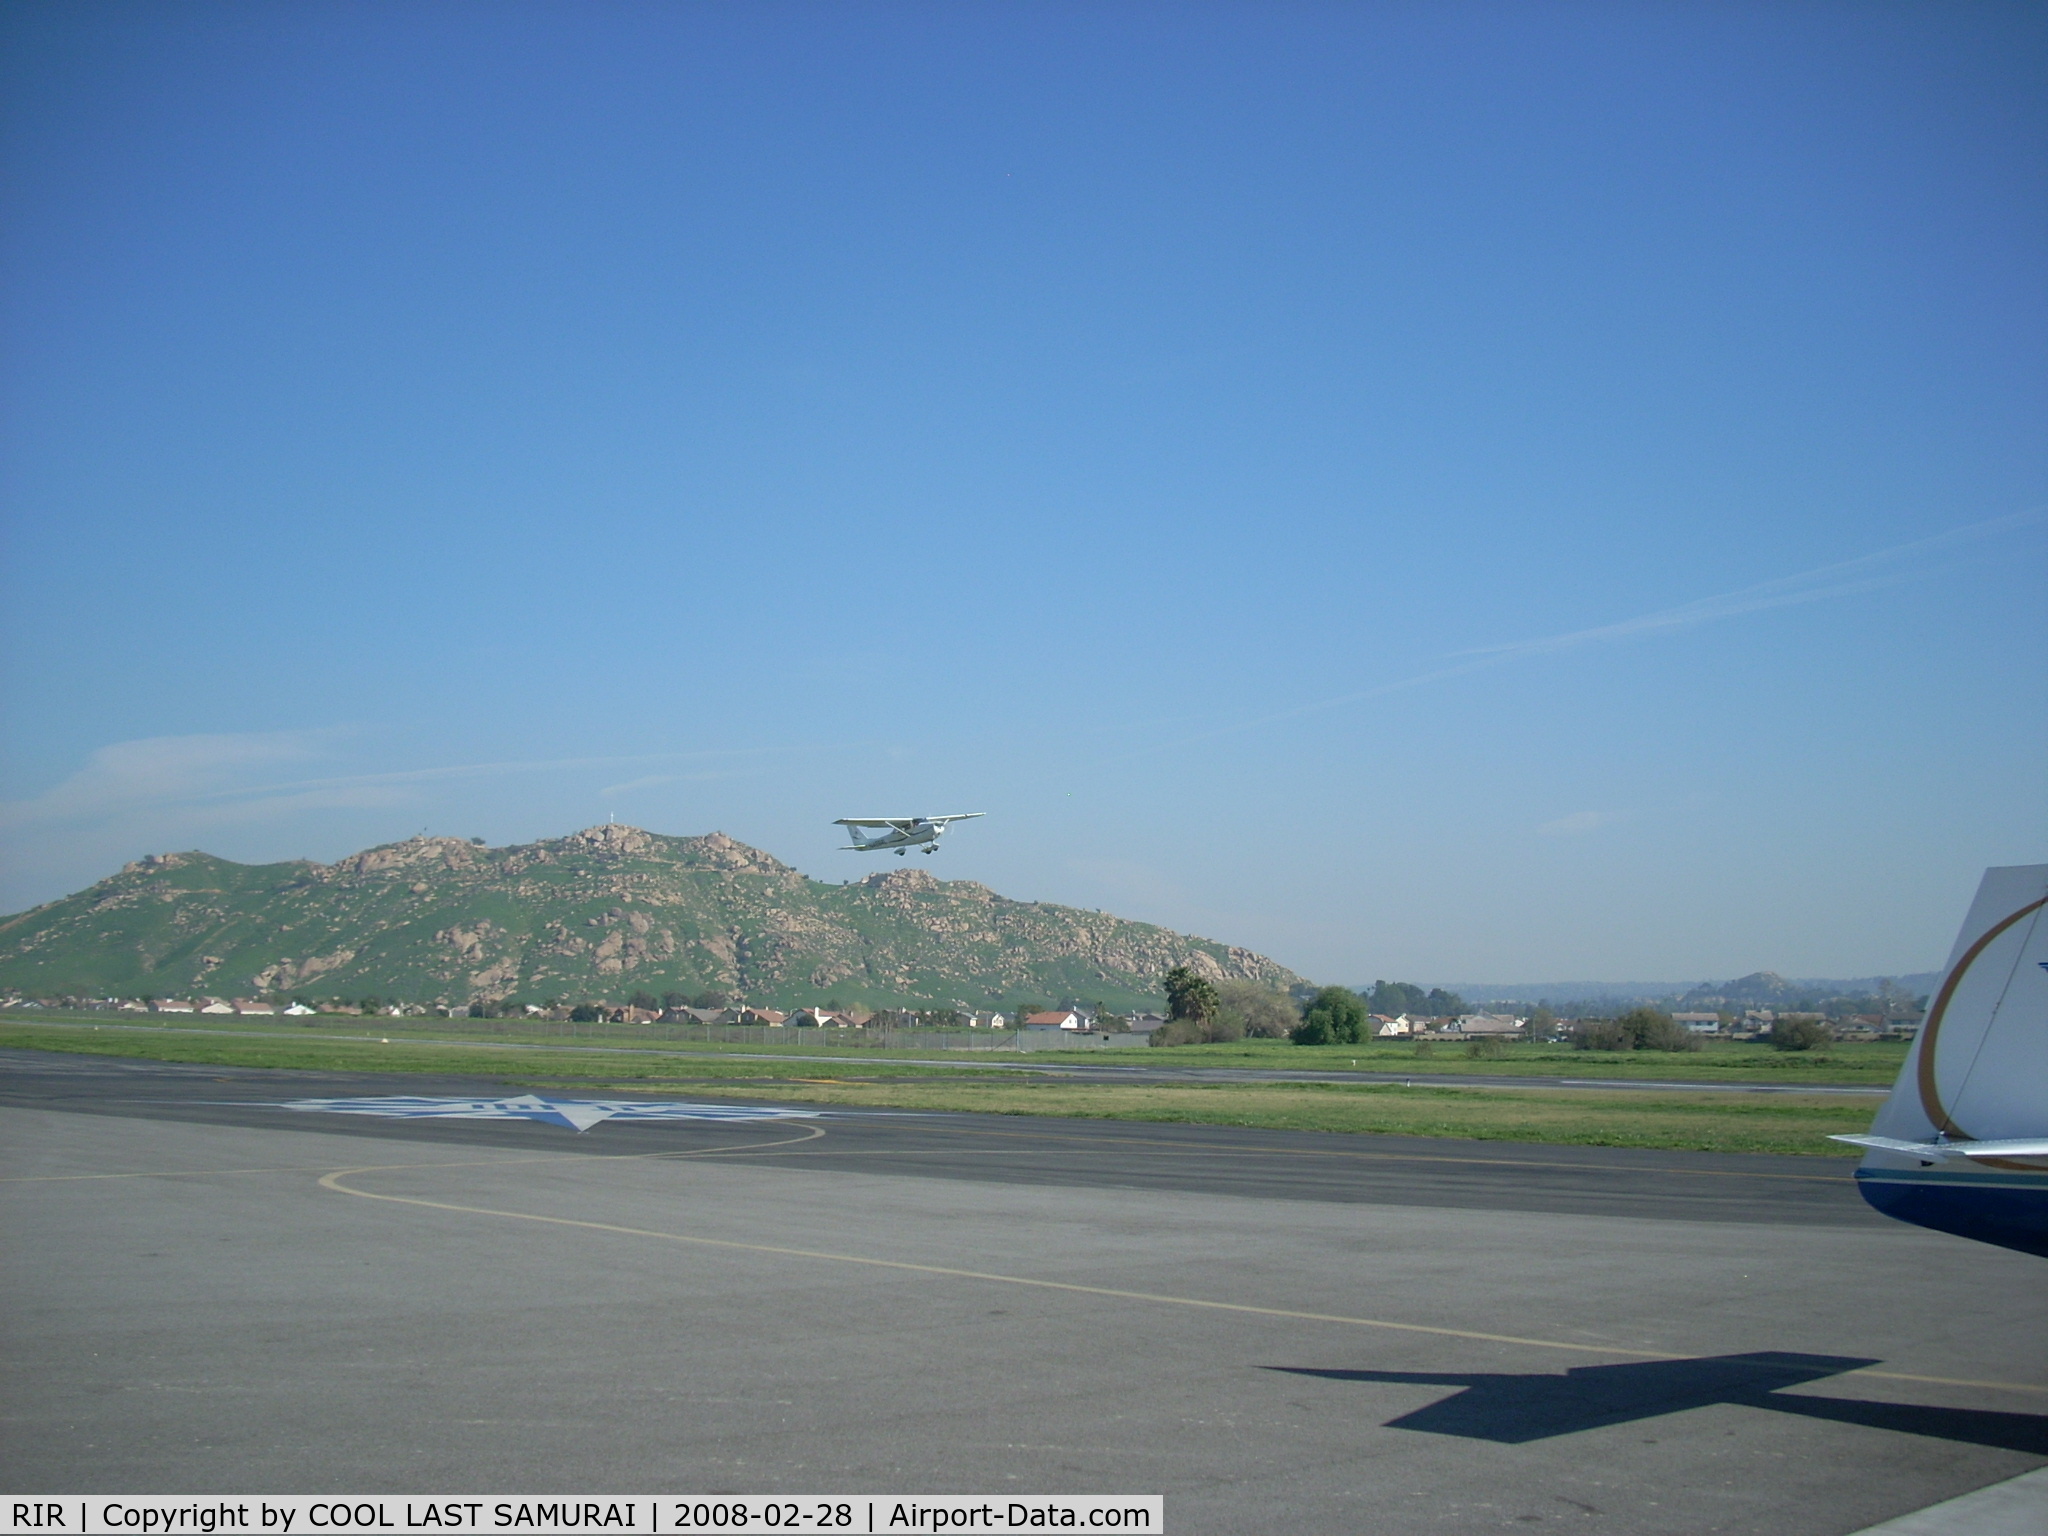 Flabob Airport (RIR) - Cessna172 taking off from RIR Rwy24